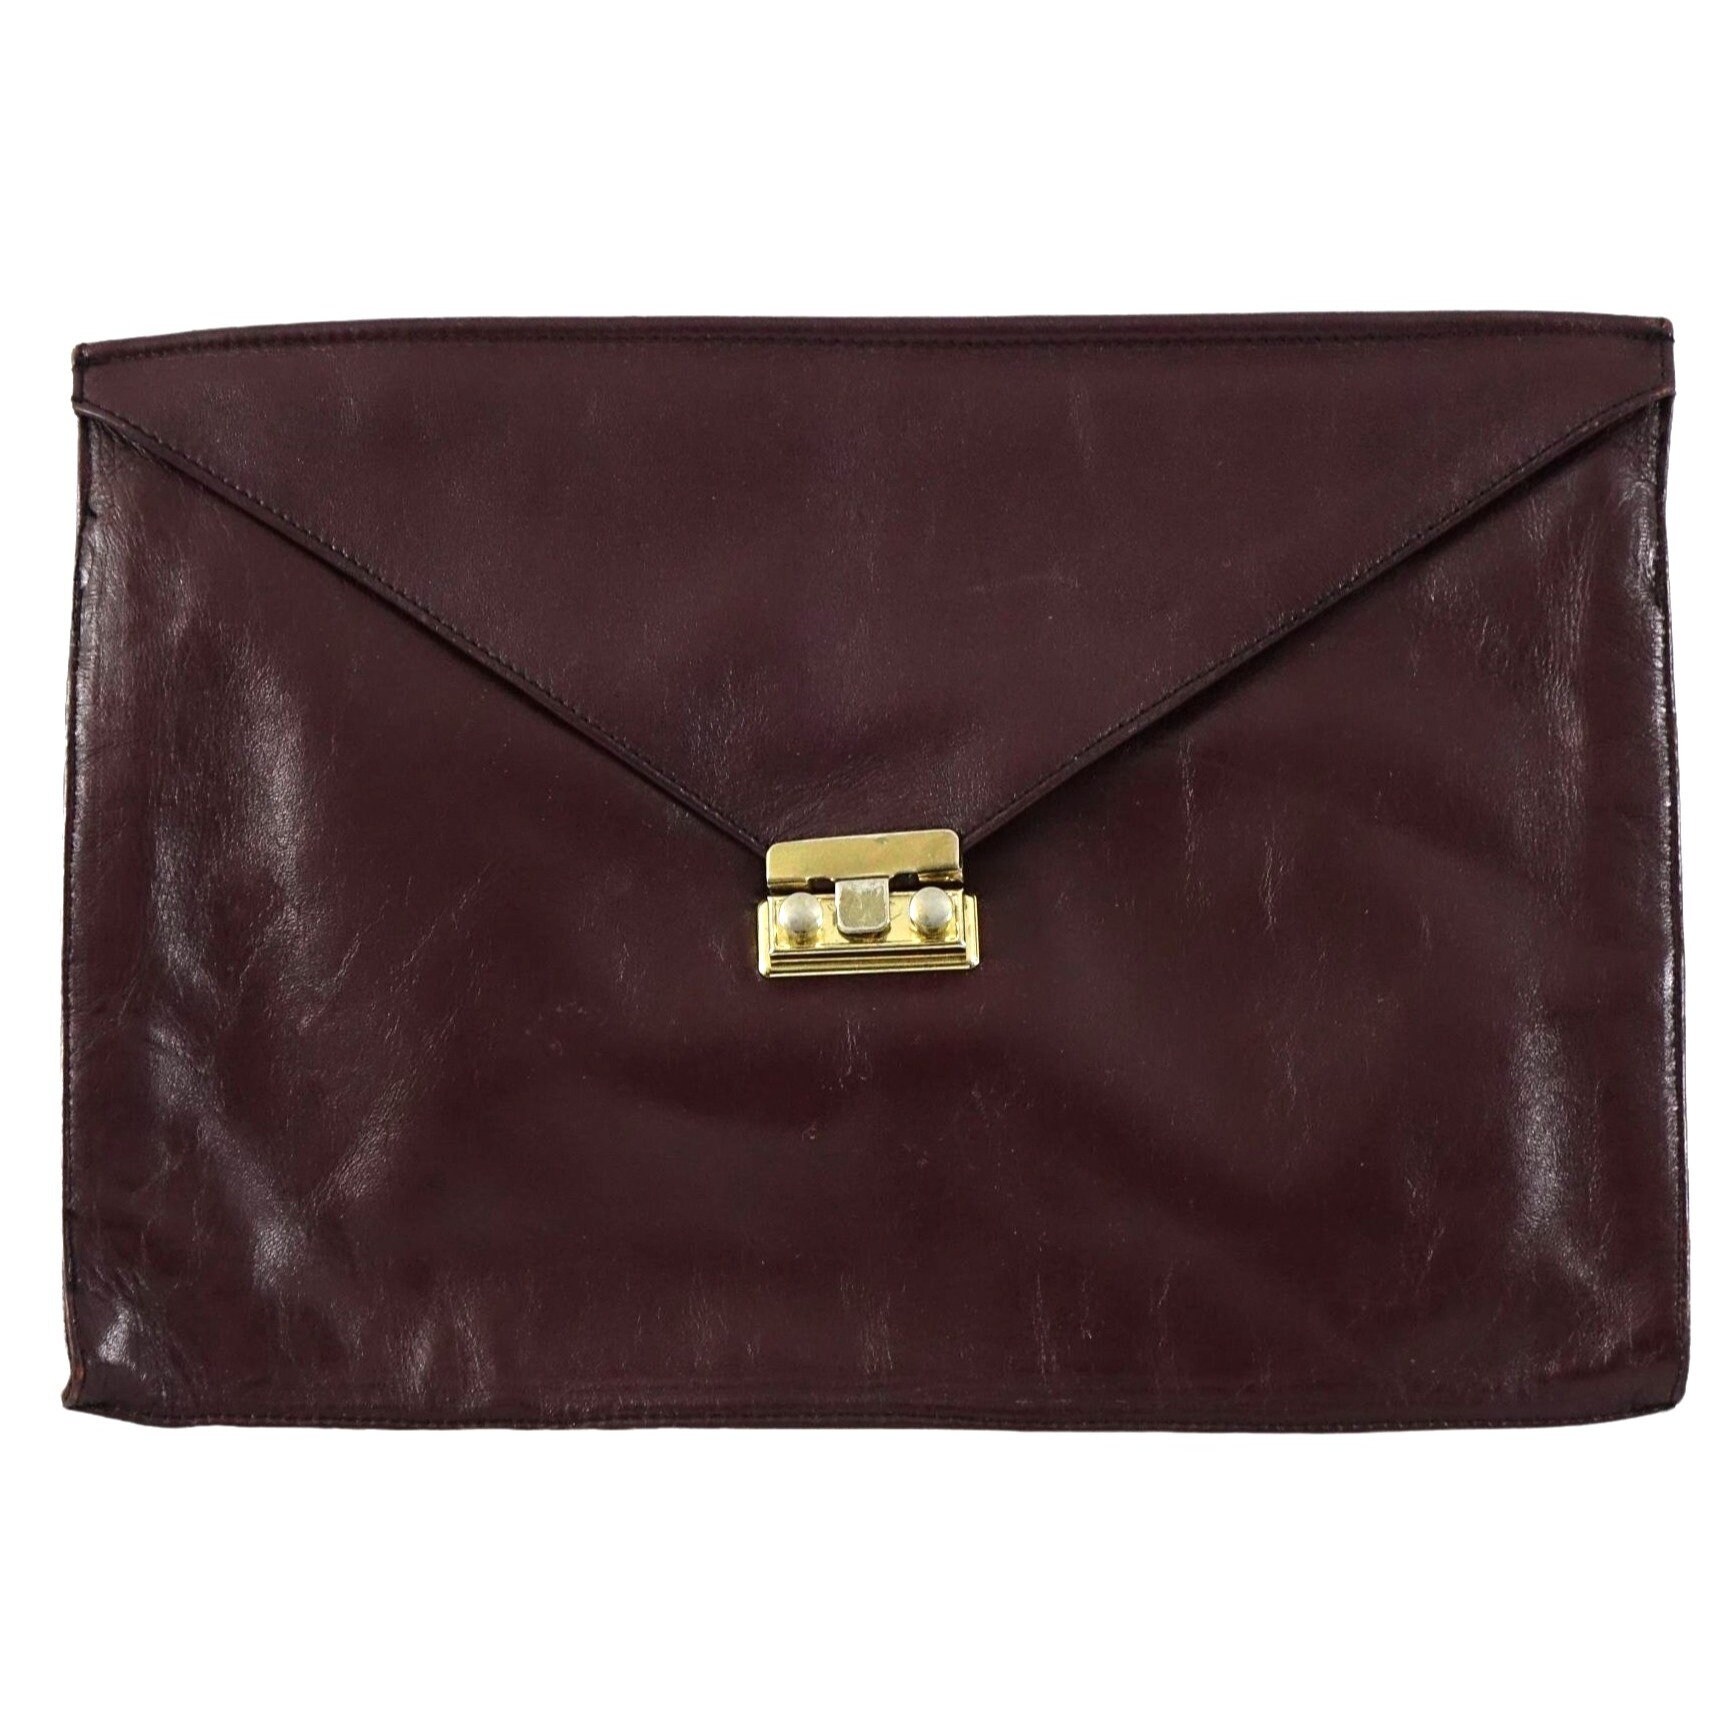 Oxblood Clutch, Envelope Clutch Bag with Silver Tone Chain Strap, Maroon Leather Purse, Slim Clutch Wallet, Evening Clutch, Clutch Handbag